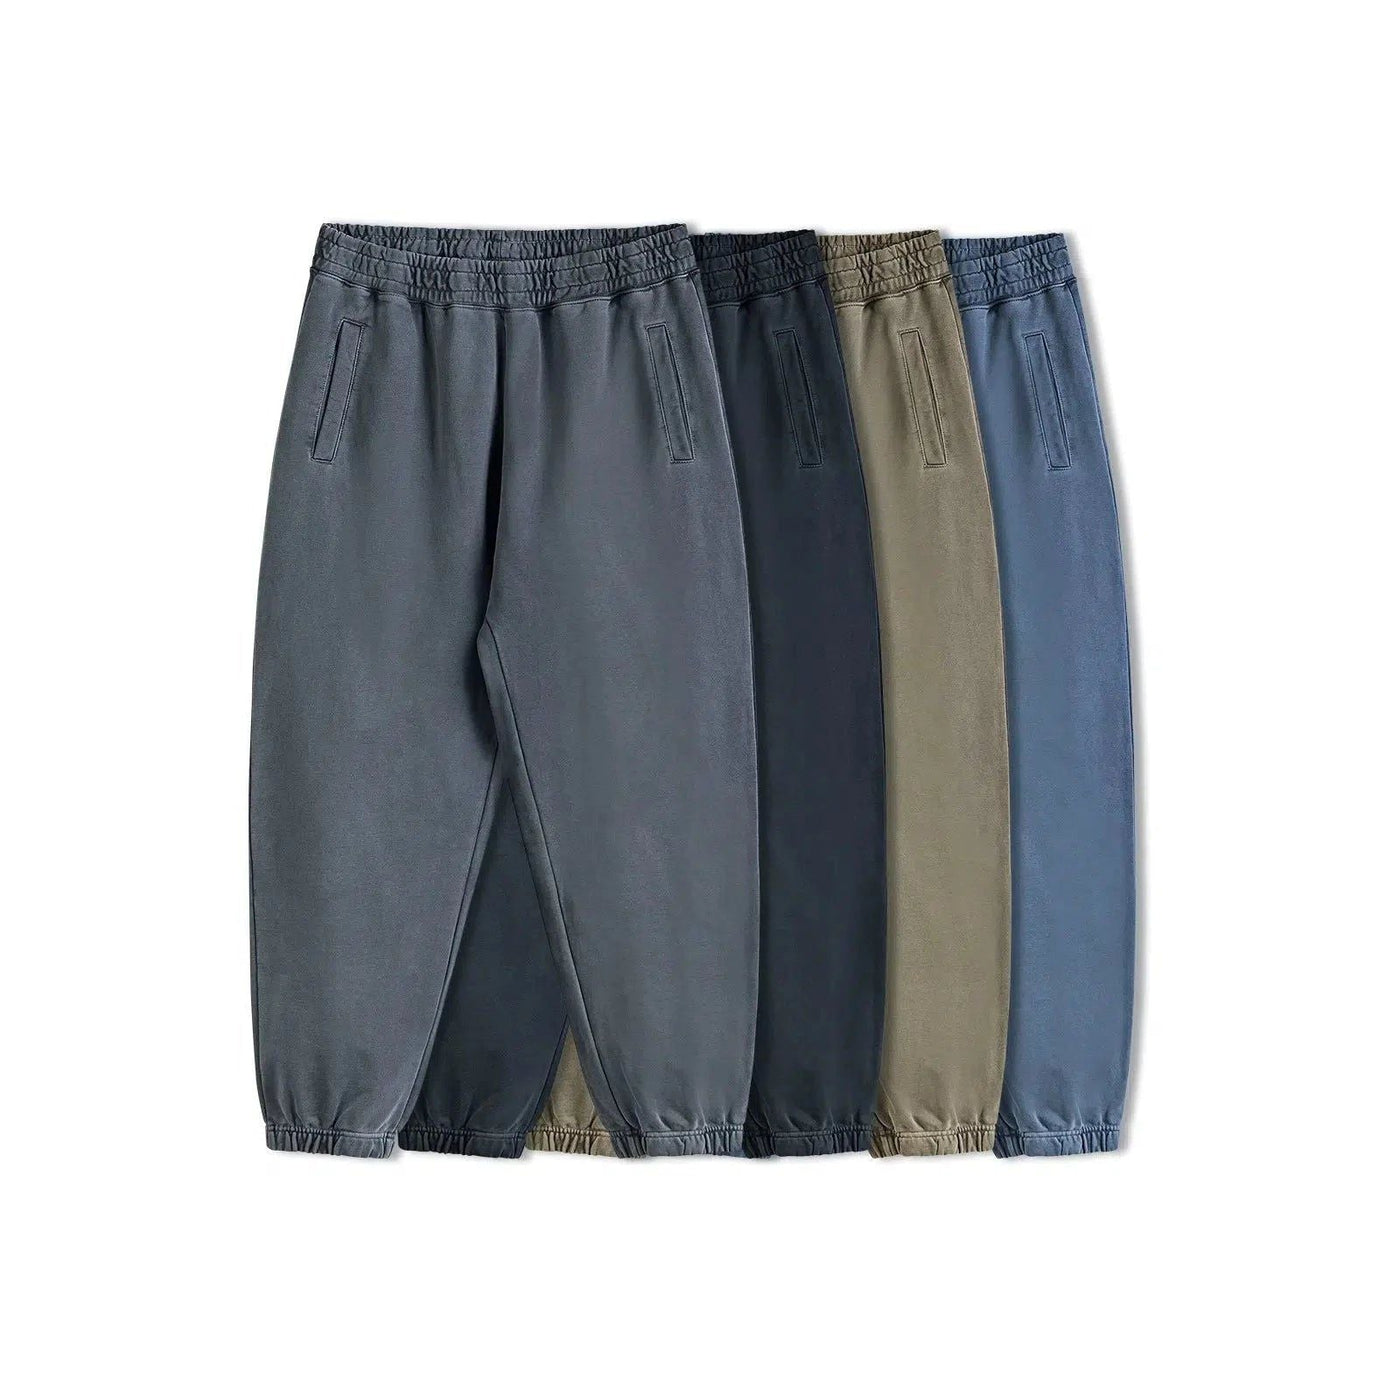 Gartered Washed Effect Pants Korean Street Fashion Pants By IDLT Shop Online at OH Vault